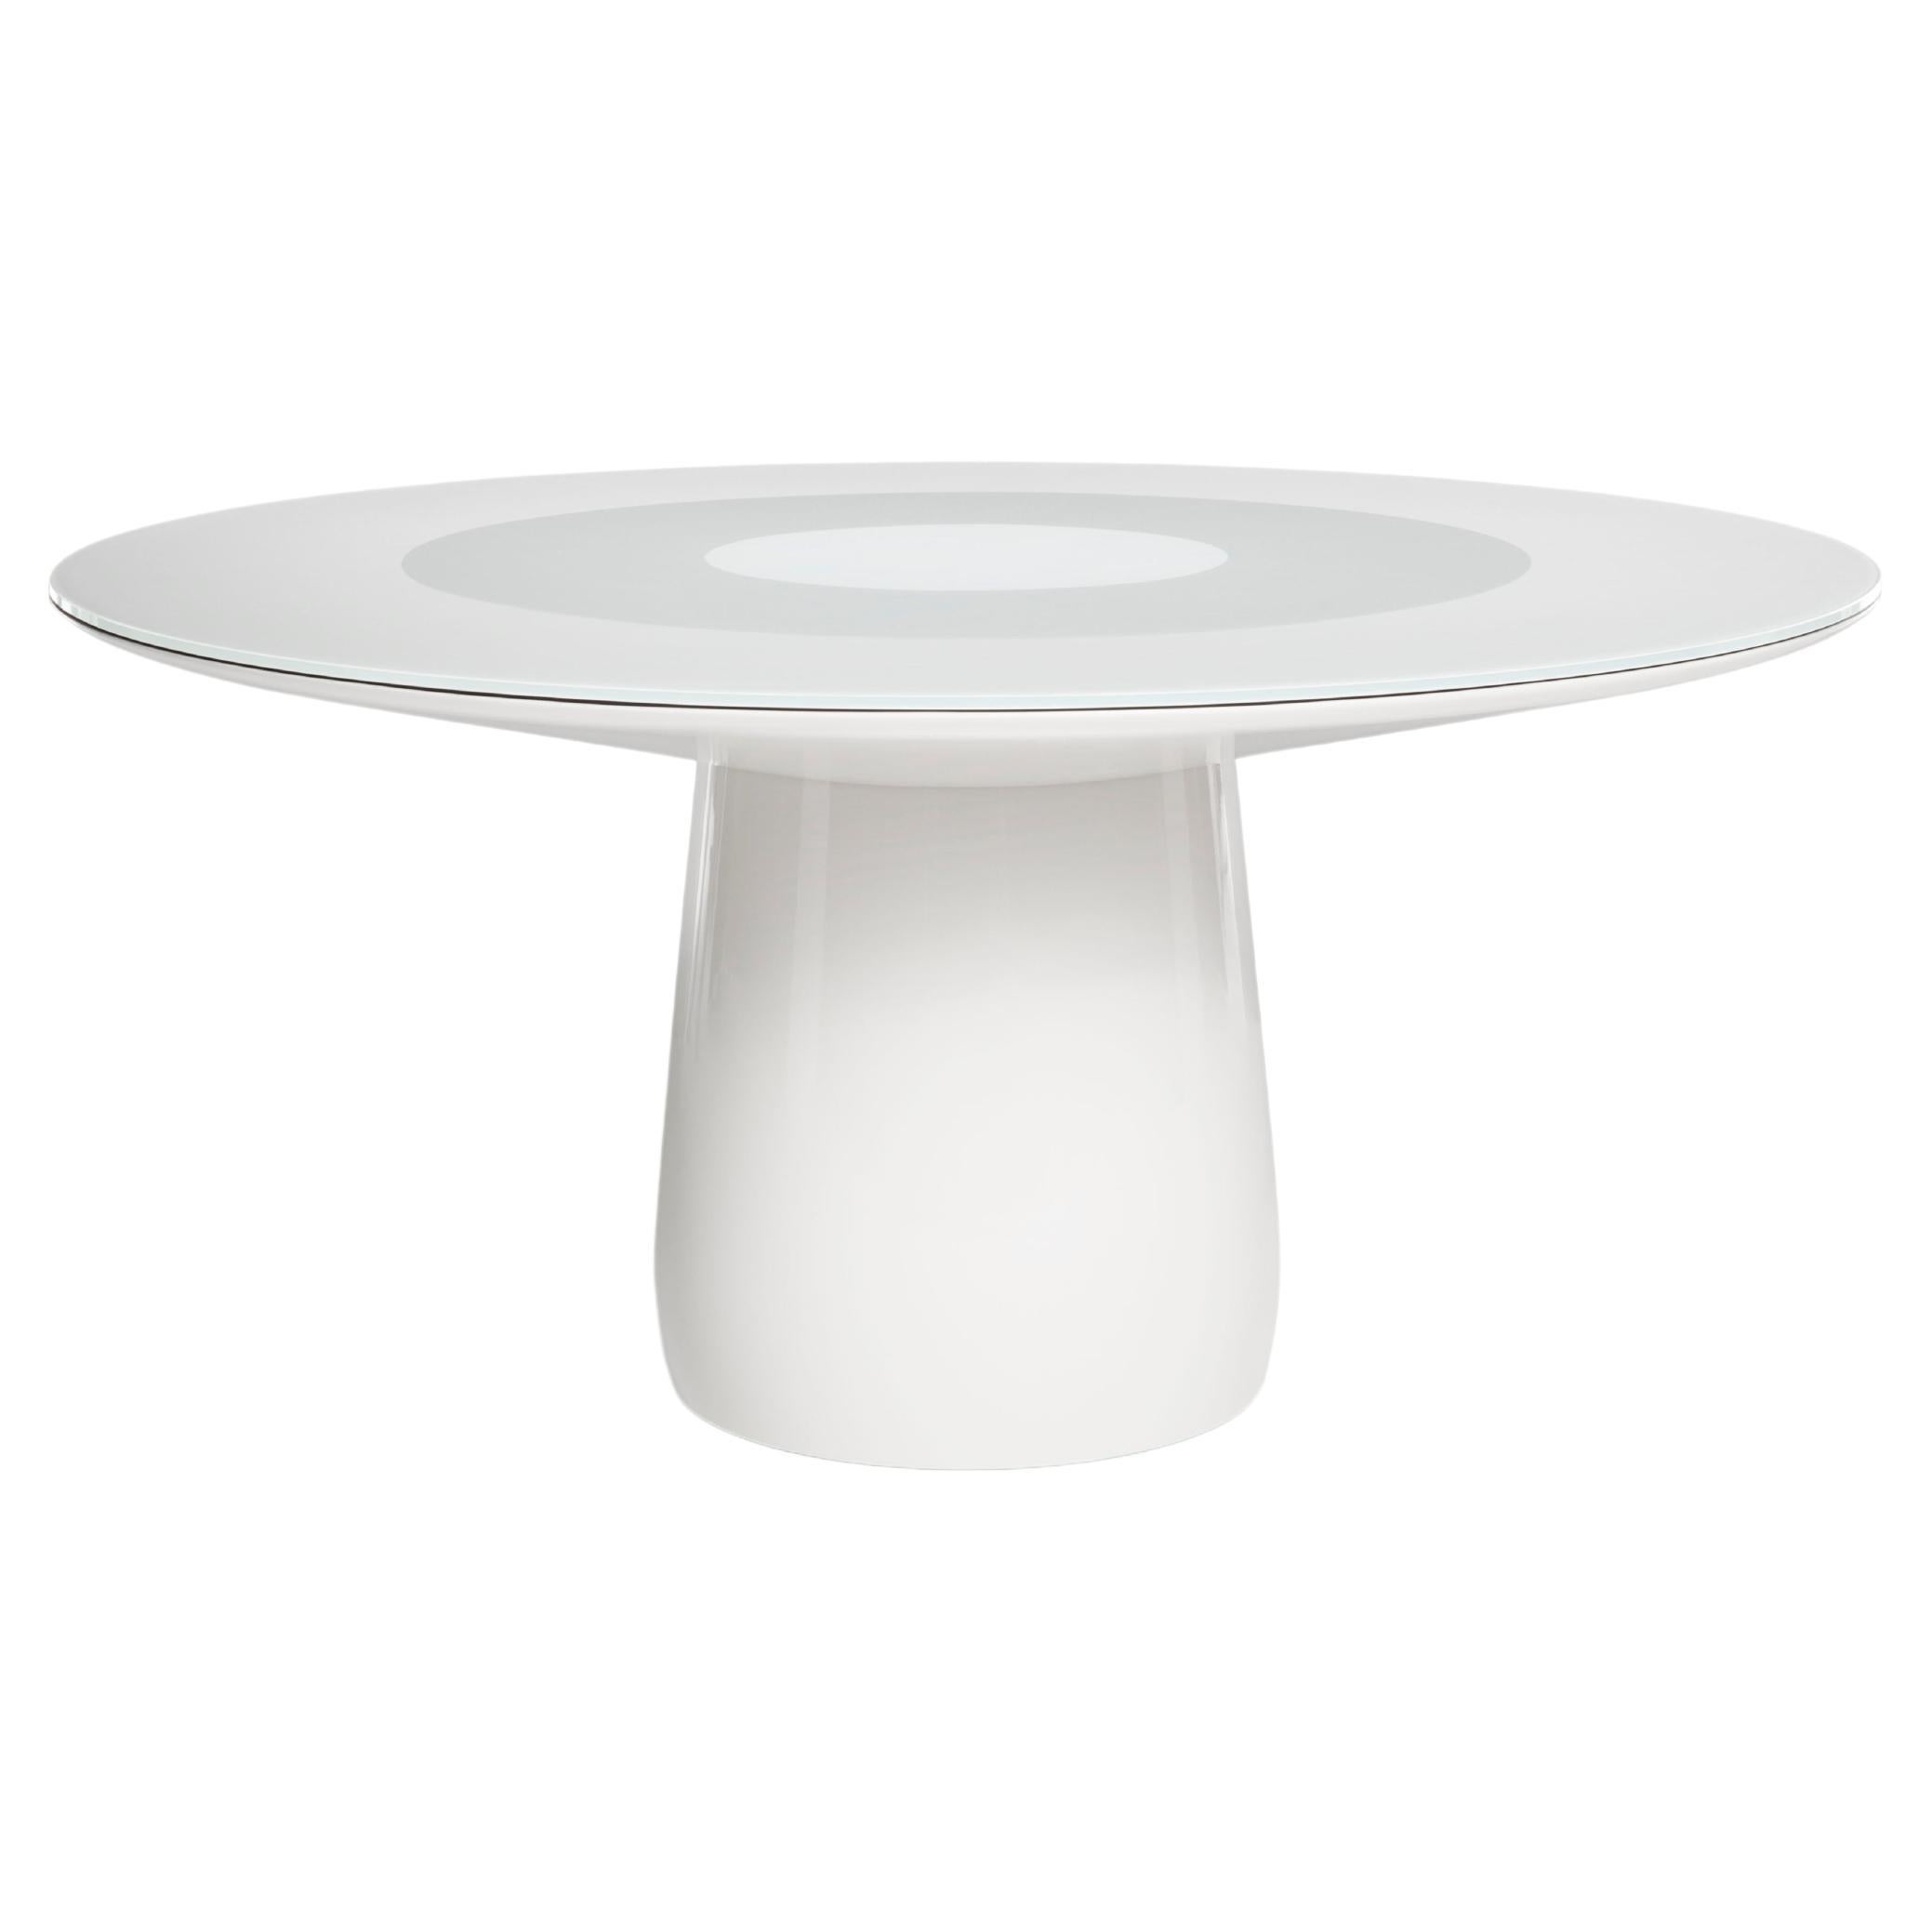 Baleri Italia Roundel Table with white Glass Top, Claesson Koivisto Rune